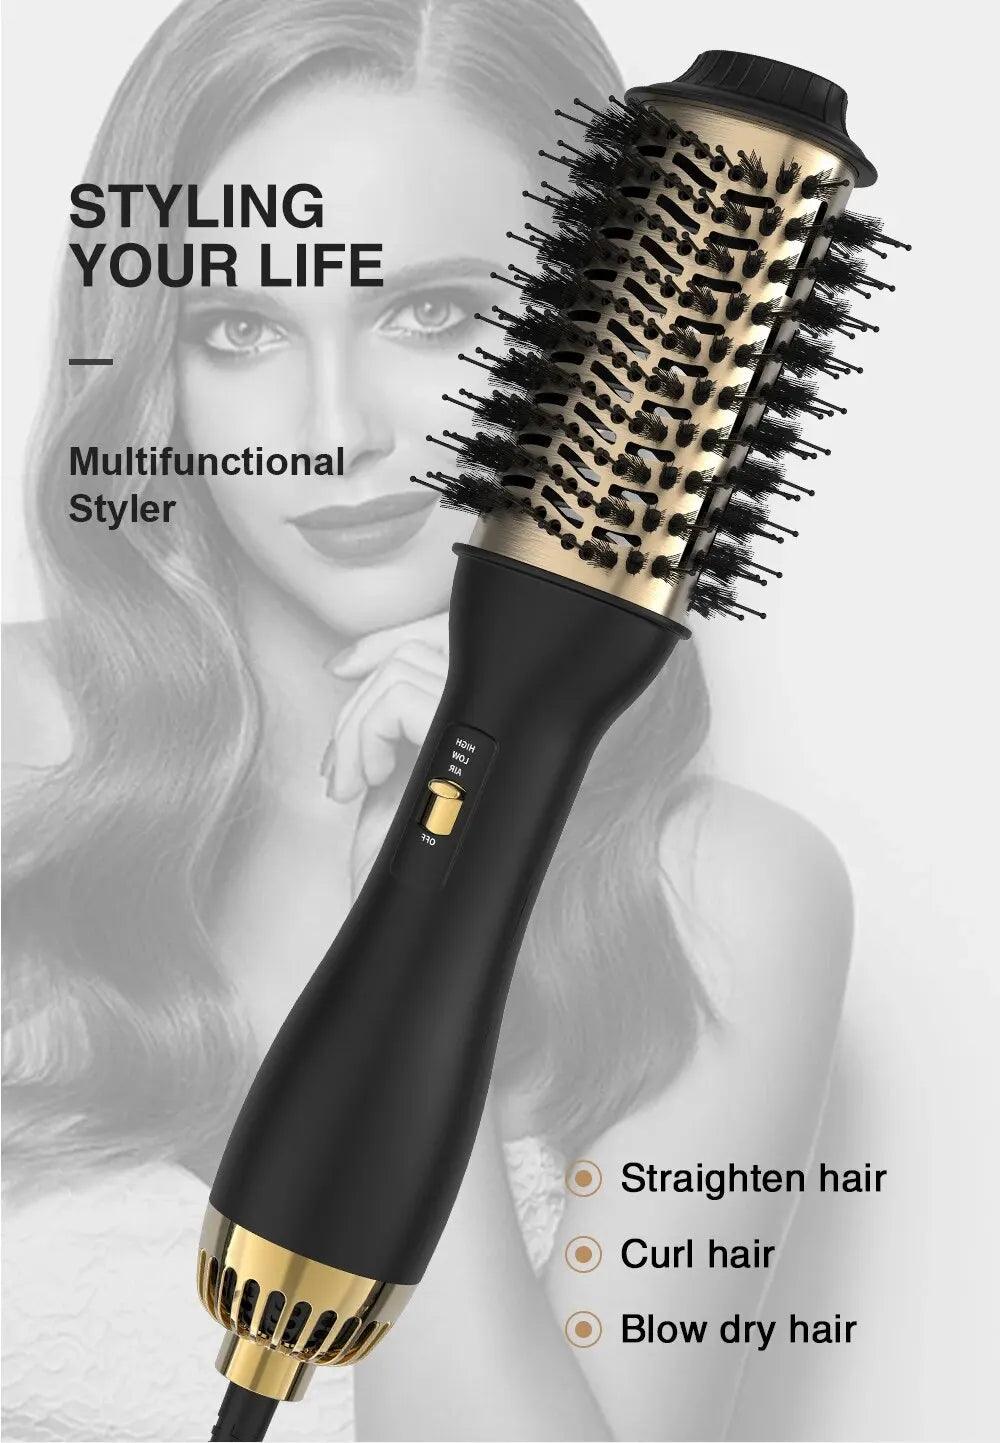 LISAPRO Black Gold Hair Dryer Brush: One-Step Hot Air Brush 2.0